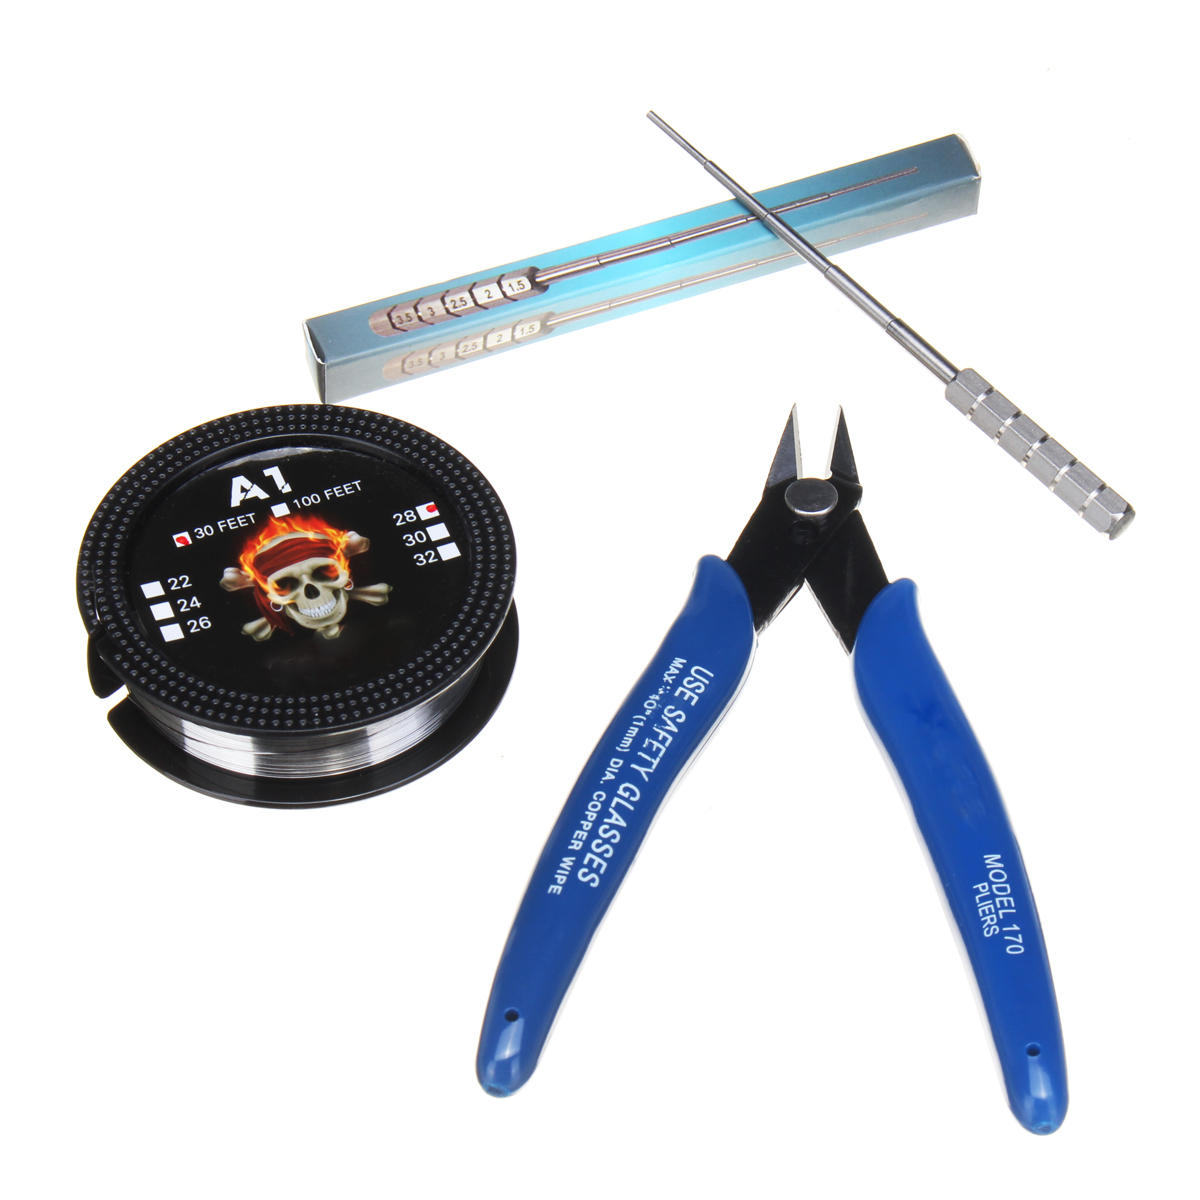 Pliers Stripping Tools Electronic Cigarette DIY Tool Kit for RDA RBA RTA DIY Vape Pliers Tool